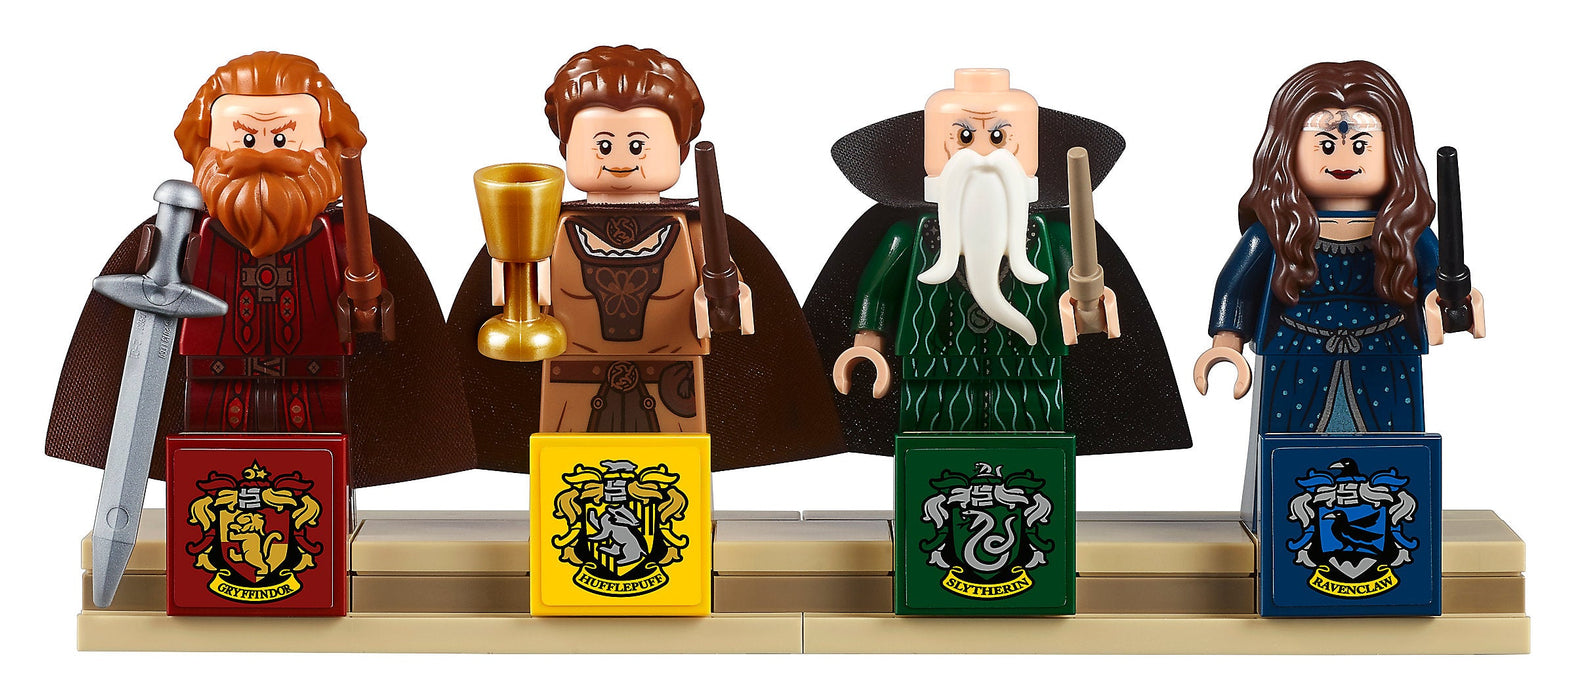 New Sealed LEGO Harry Potter Hogwarts Castle 71043 Building Kit Set 6,020  Pieces 692632708449